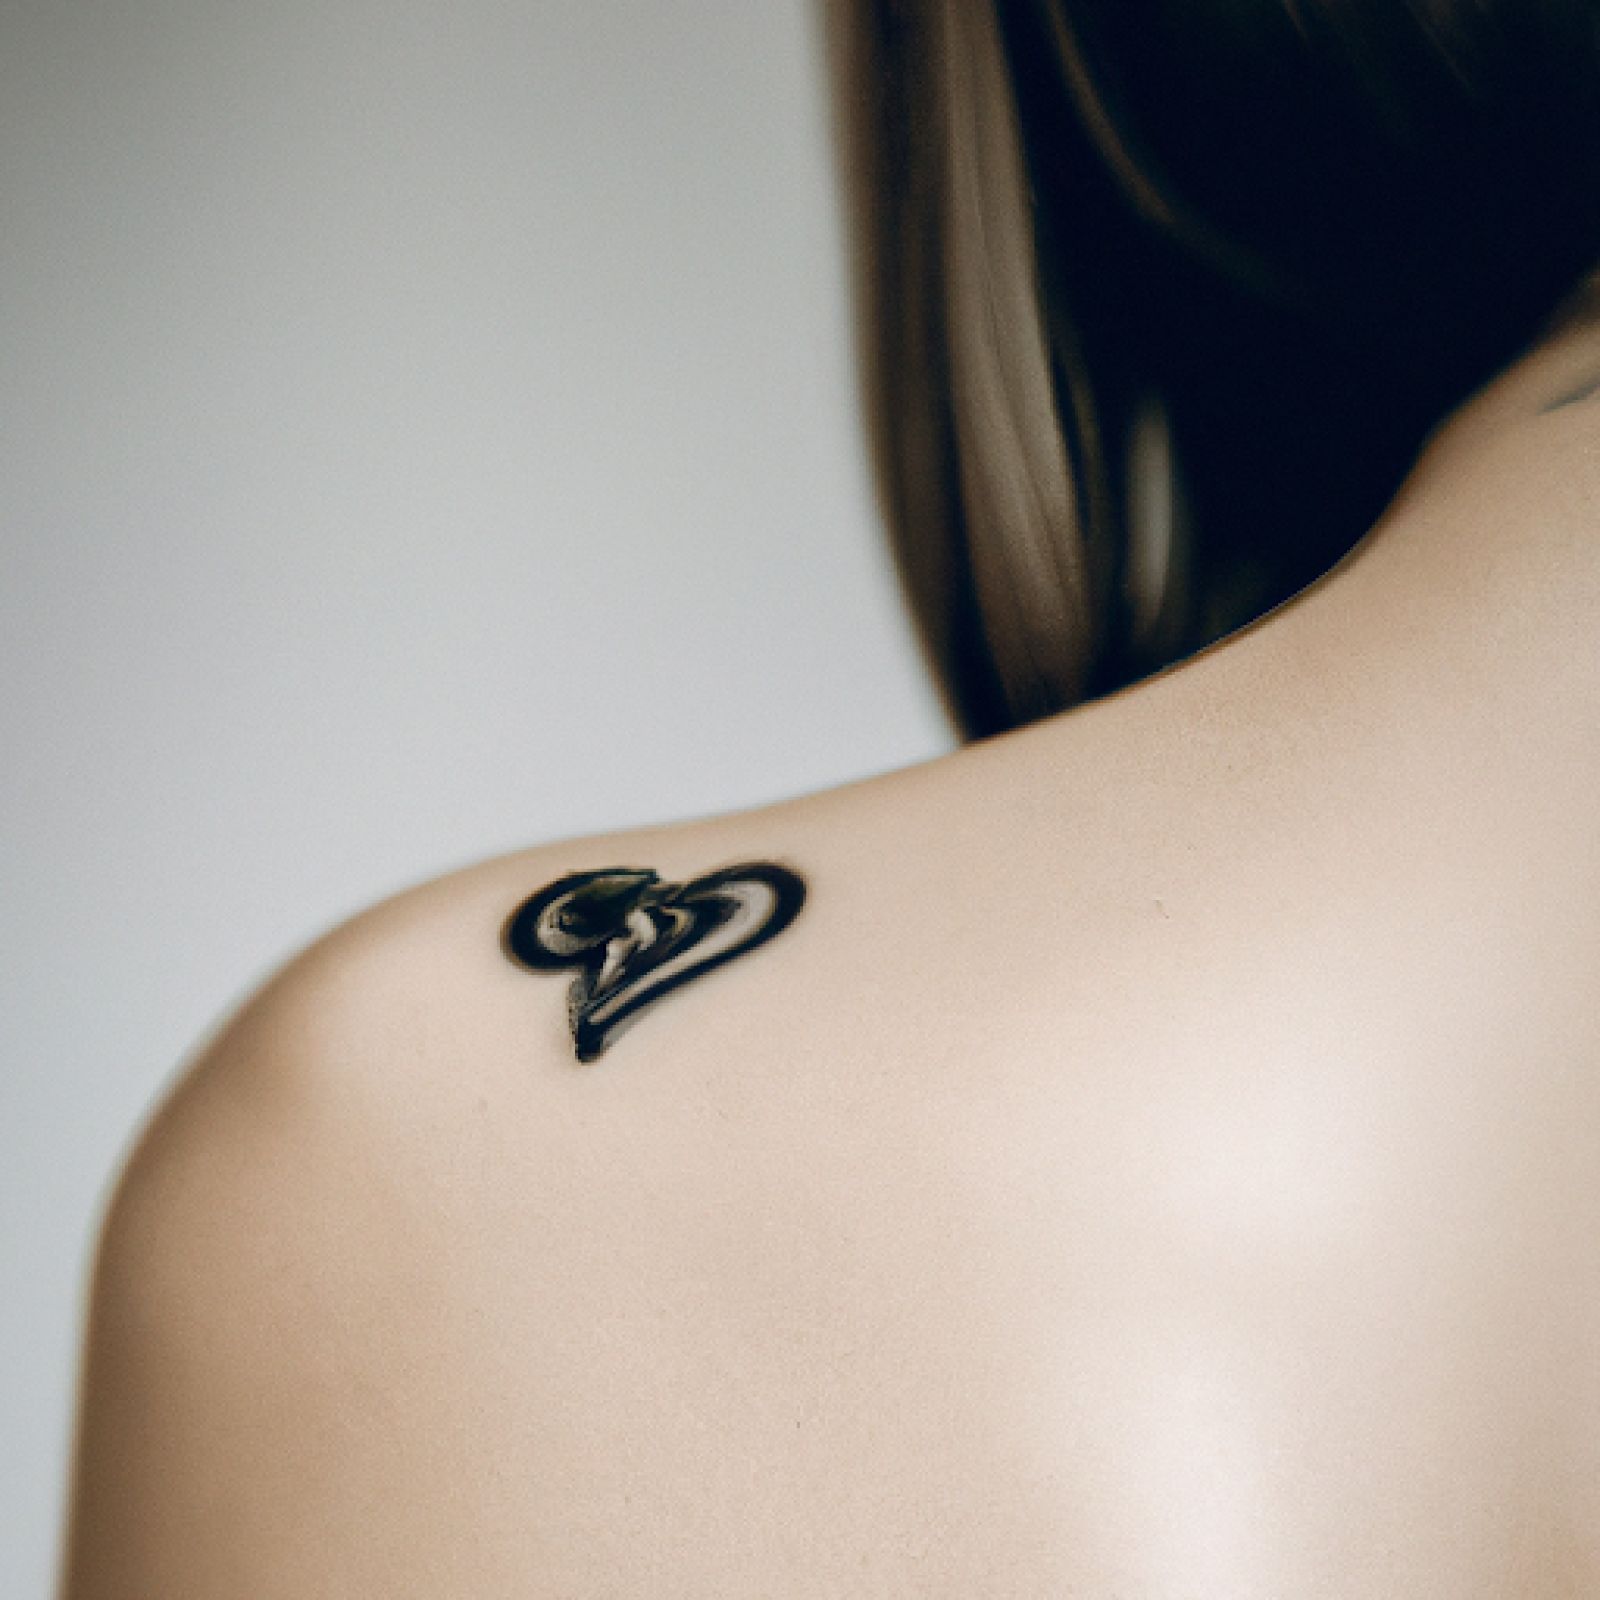 Heart tattoo on shoulder for women